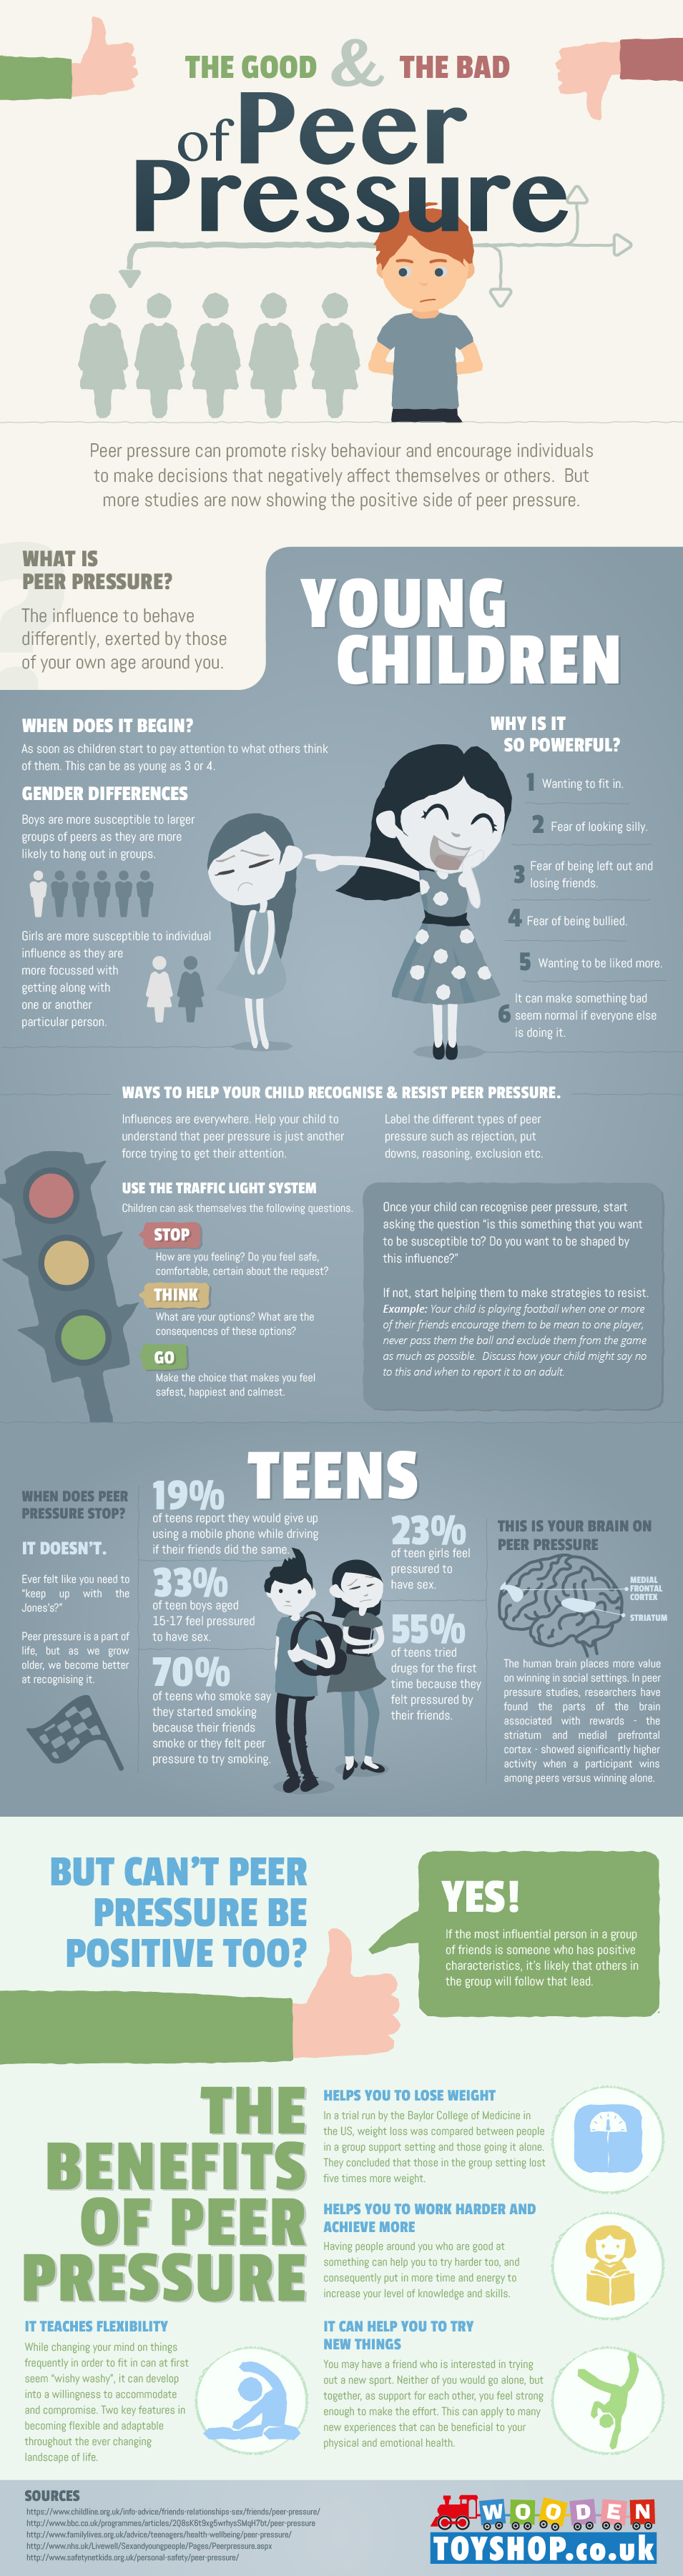 peer pressure infographic